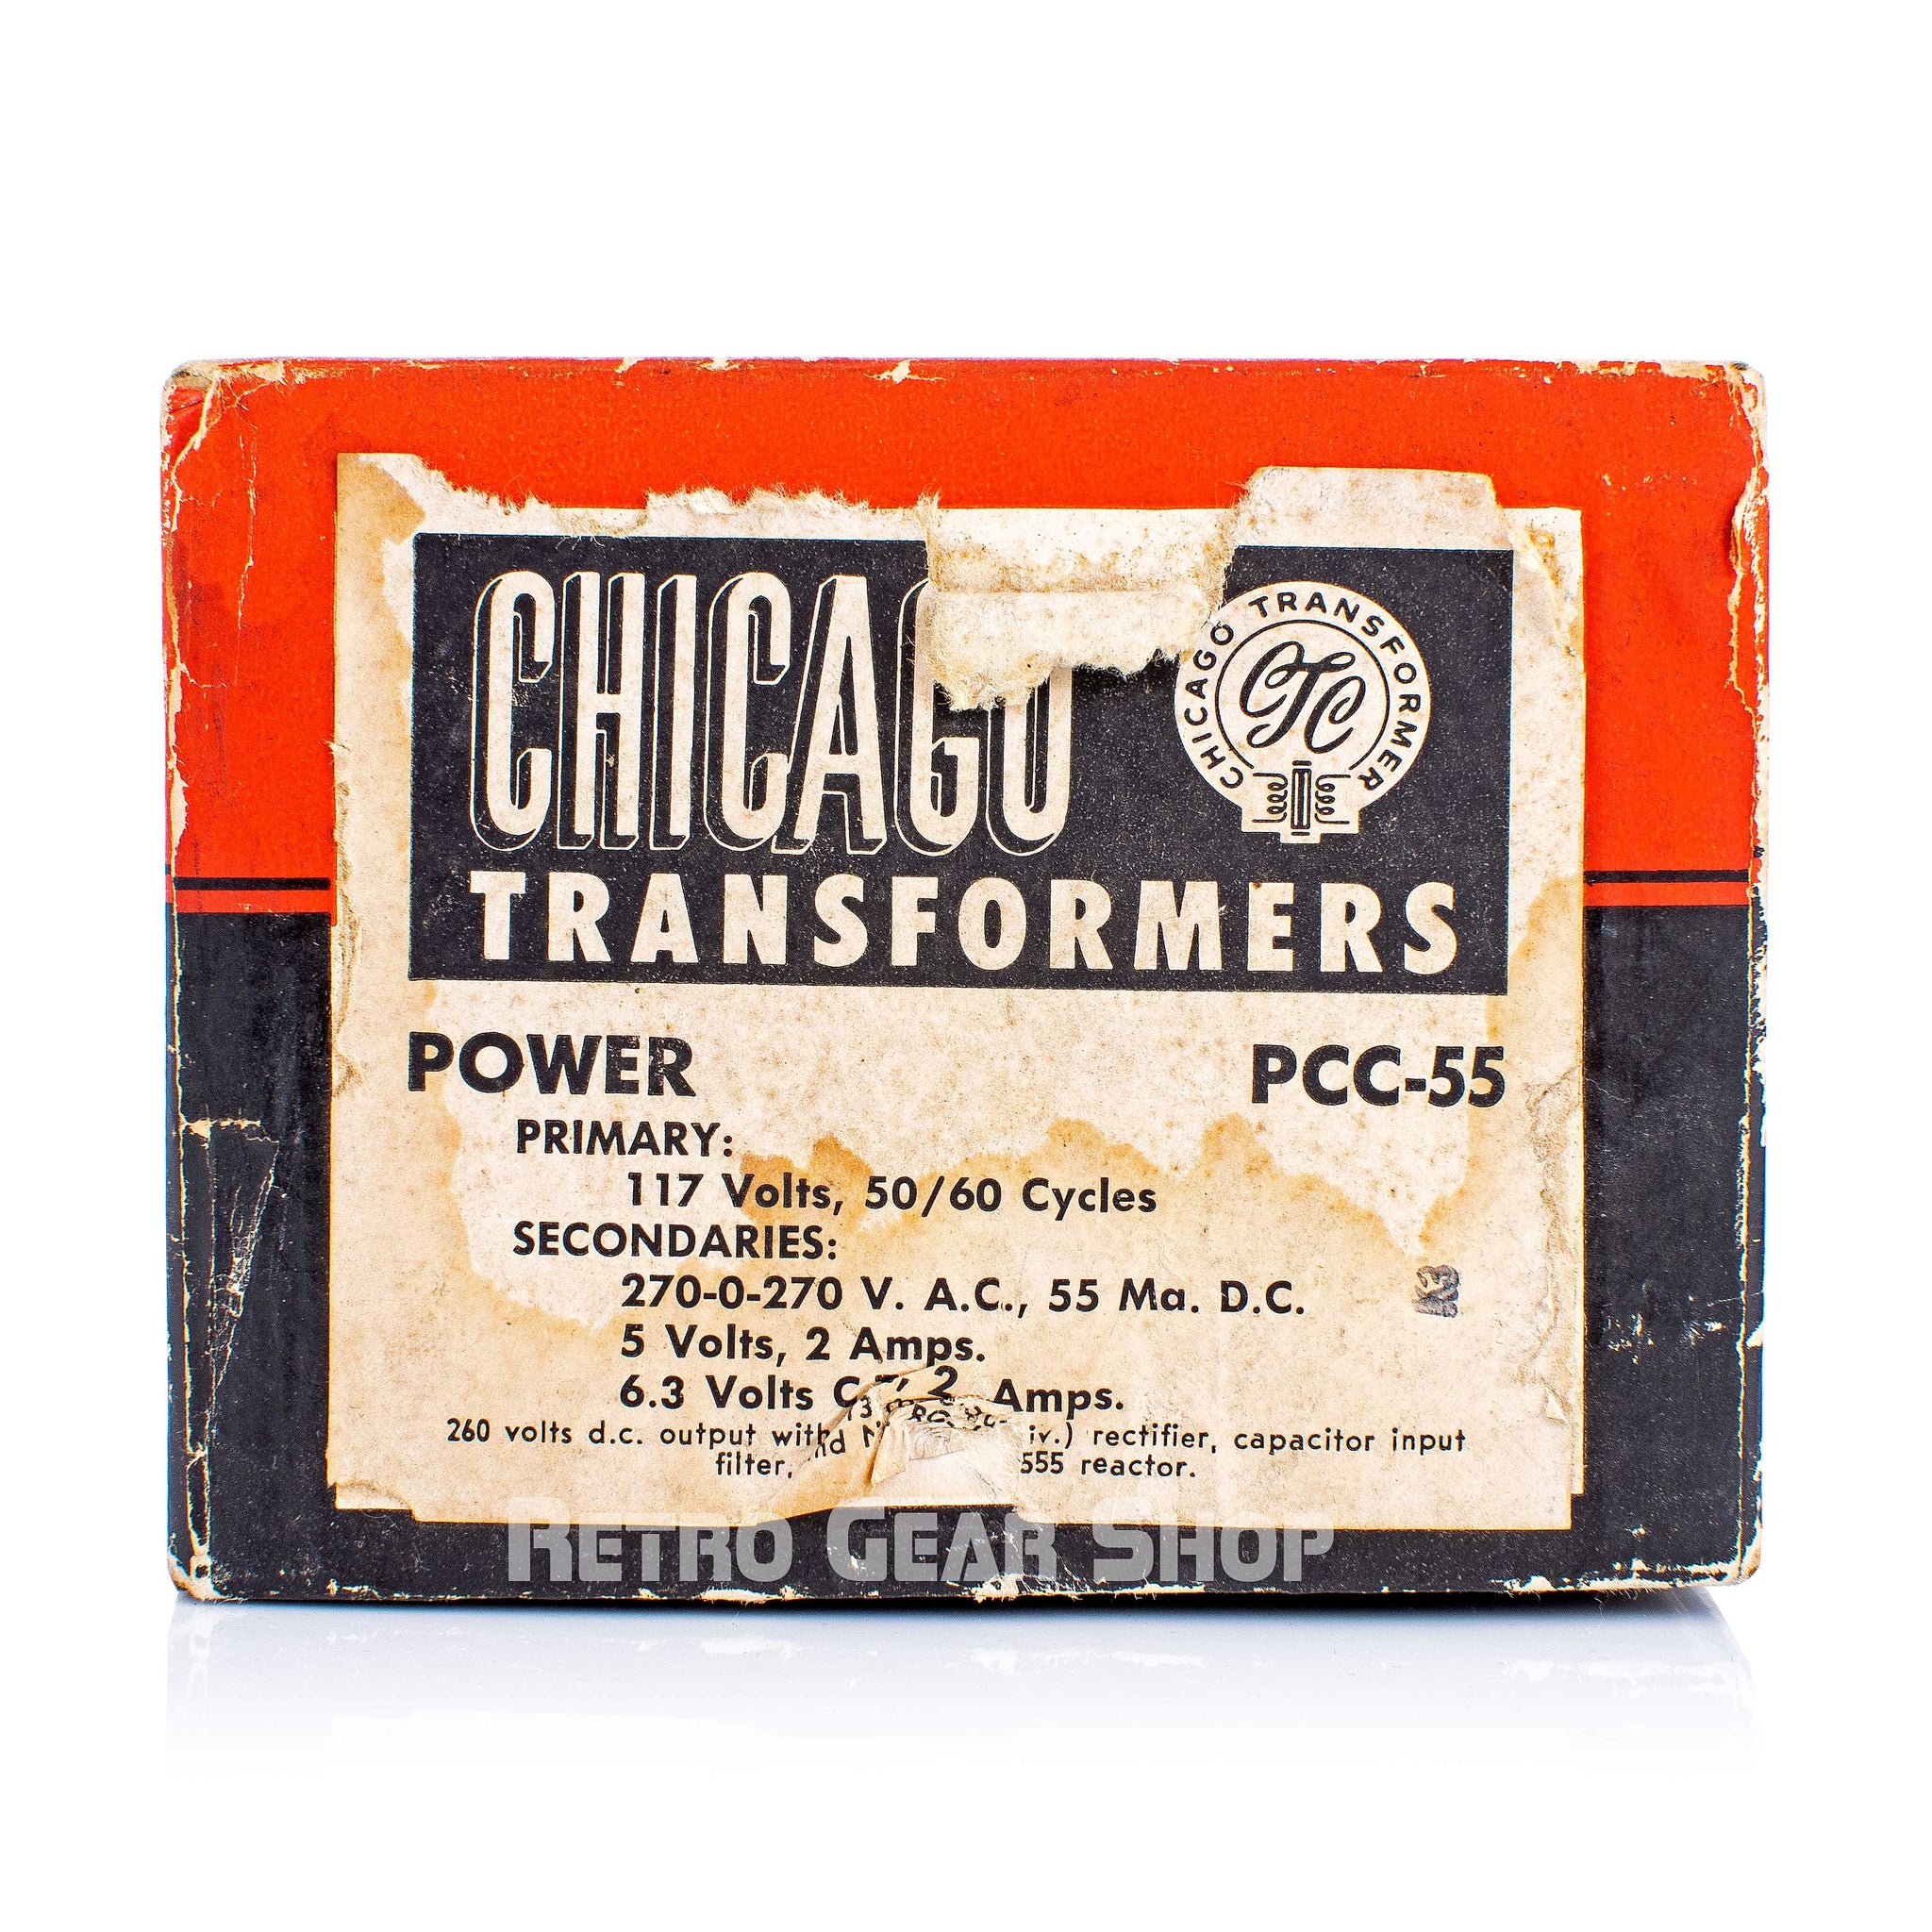 Chicago Transformer PCC-55 Box